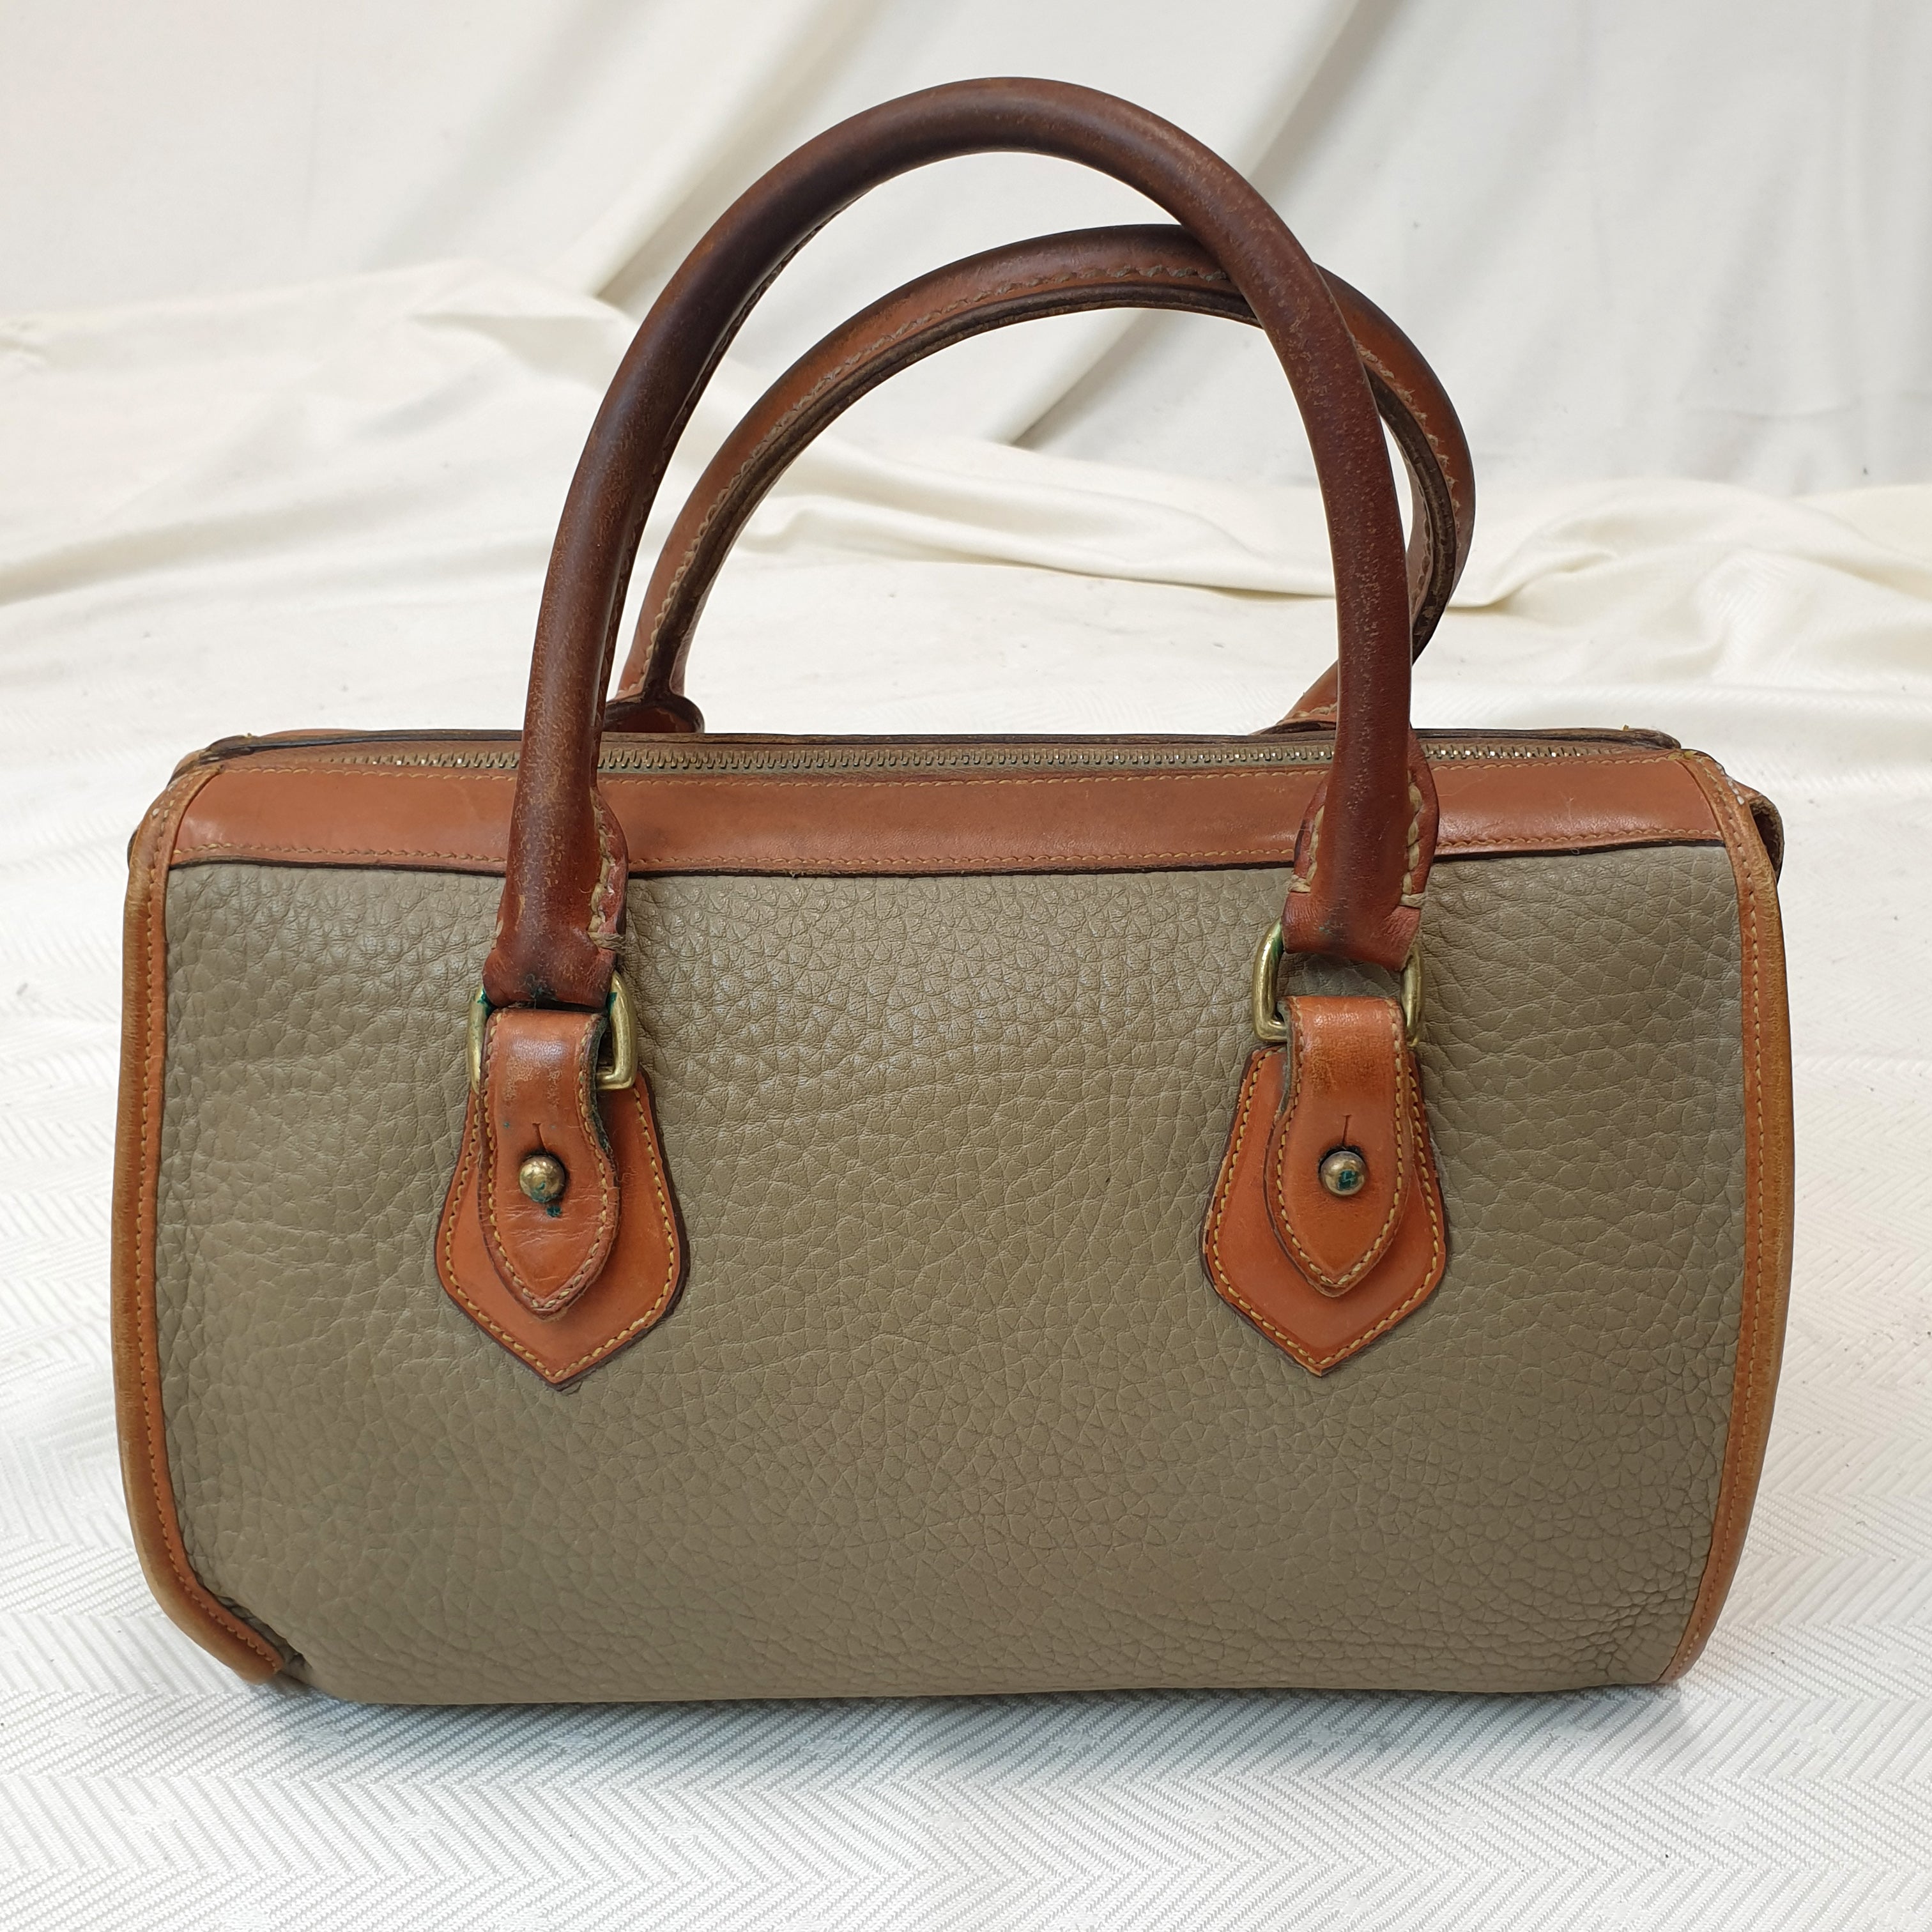 Dooney & Bourke Olivegreen Leather Handbag